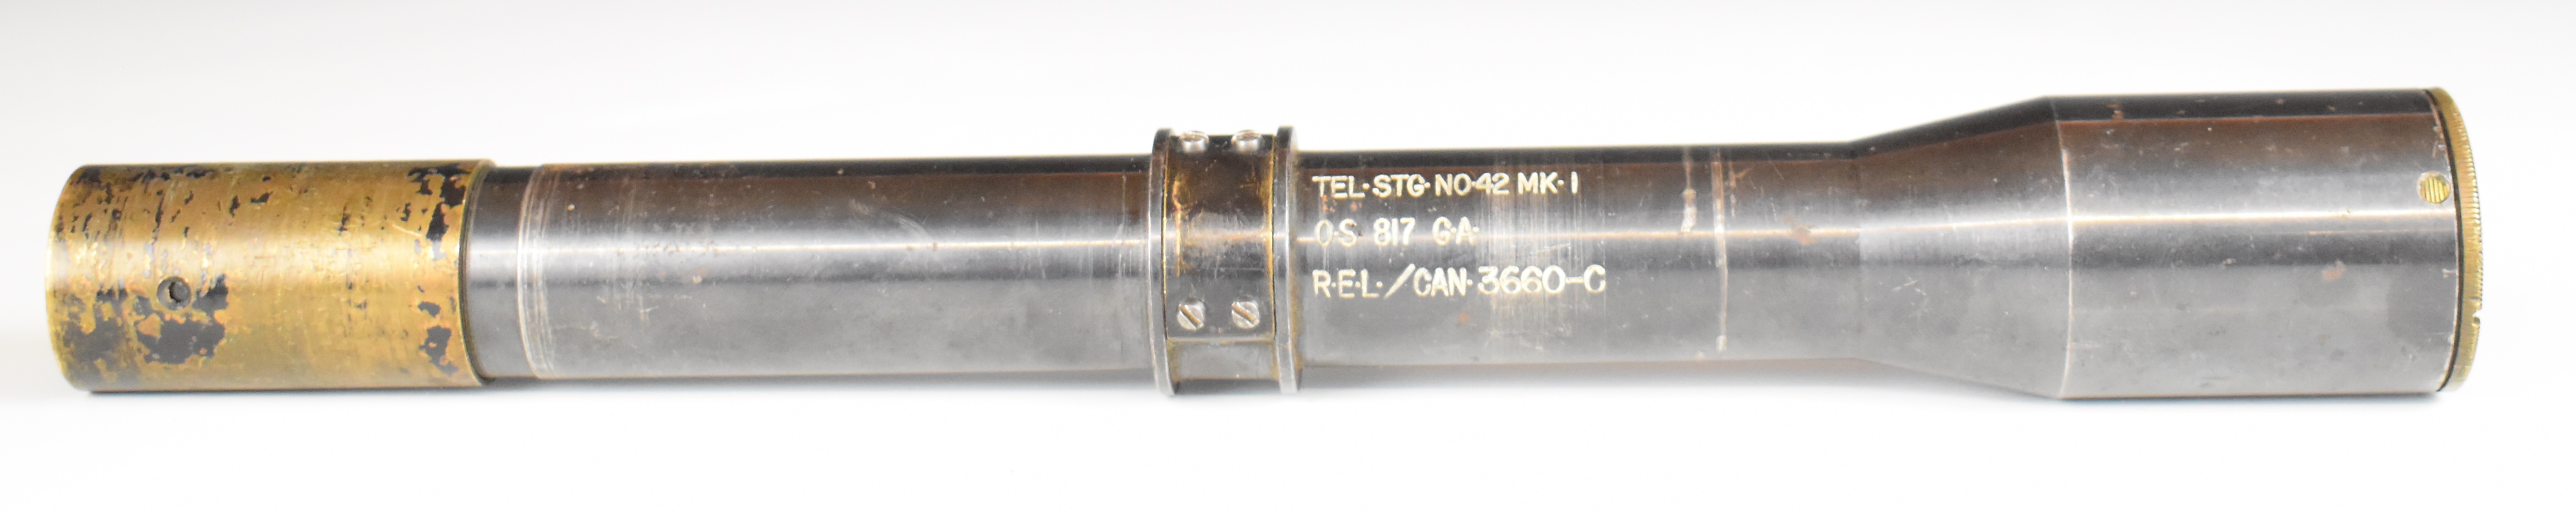 WWII No. 42 Mk I scope stamped 'Tel Stg No 42 MK.I OS 817 GA REL/CAN 3660-C', 28.5cm long.